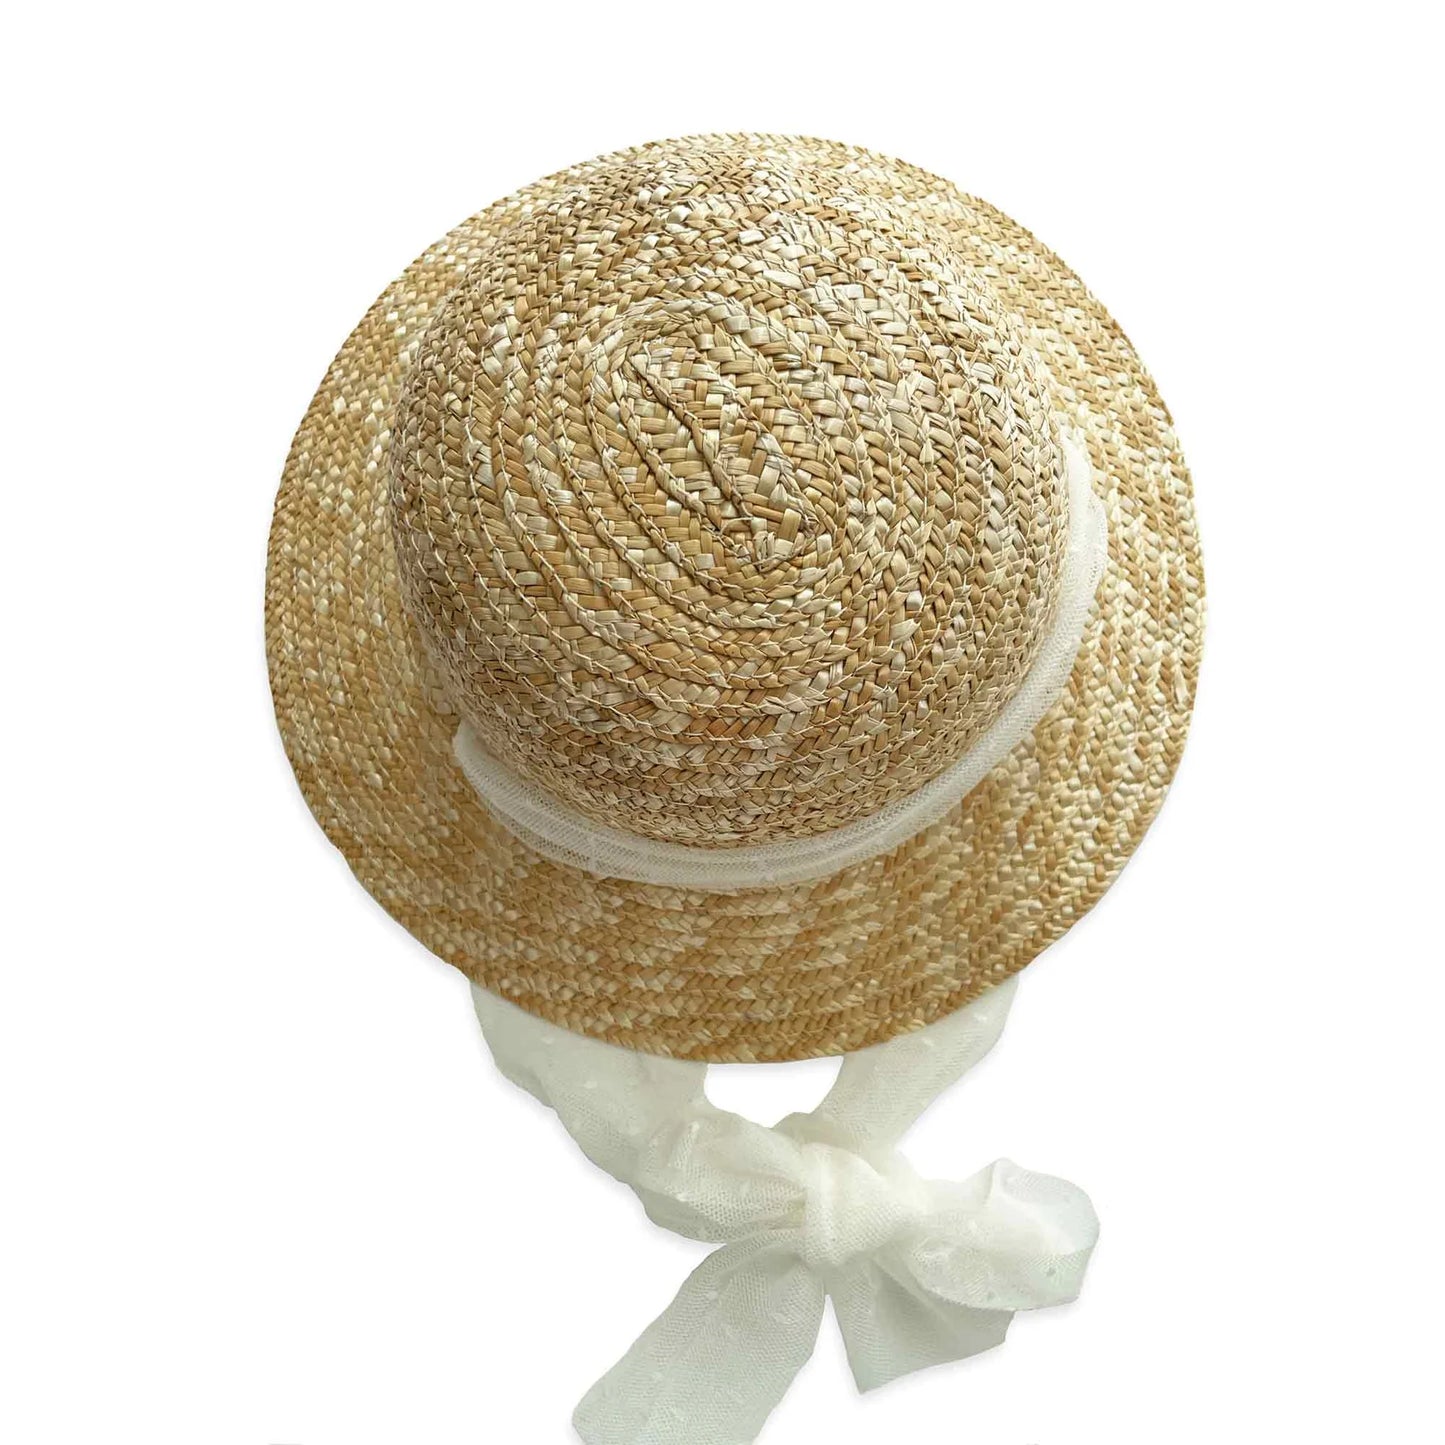 Ceremony Tulle Swiss Dot Canotier Straw Hat - Ivory